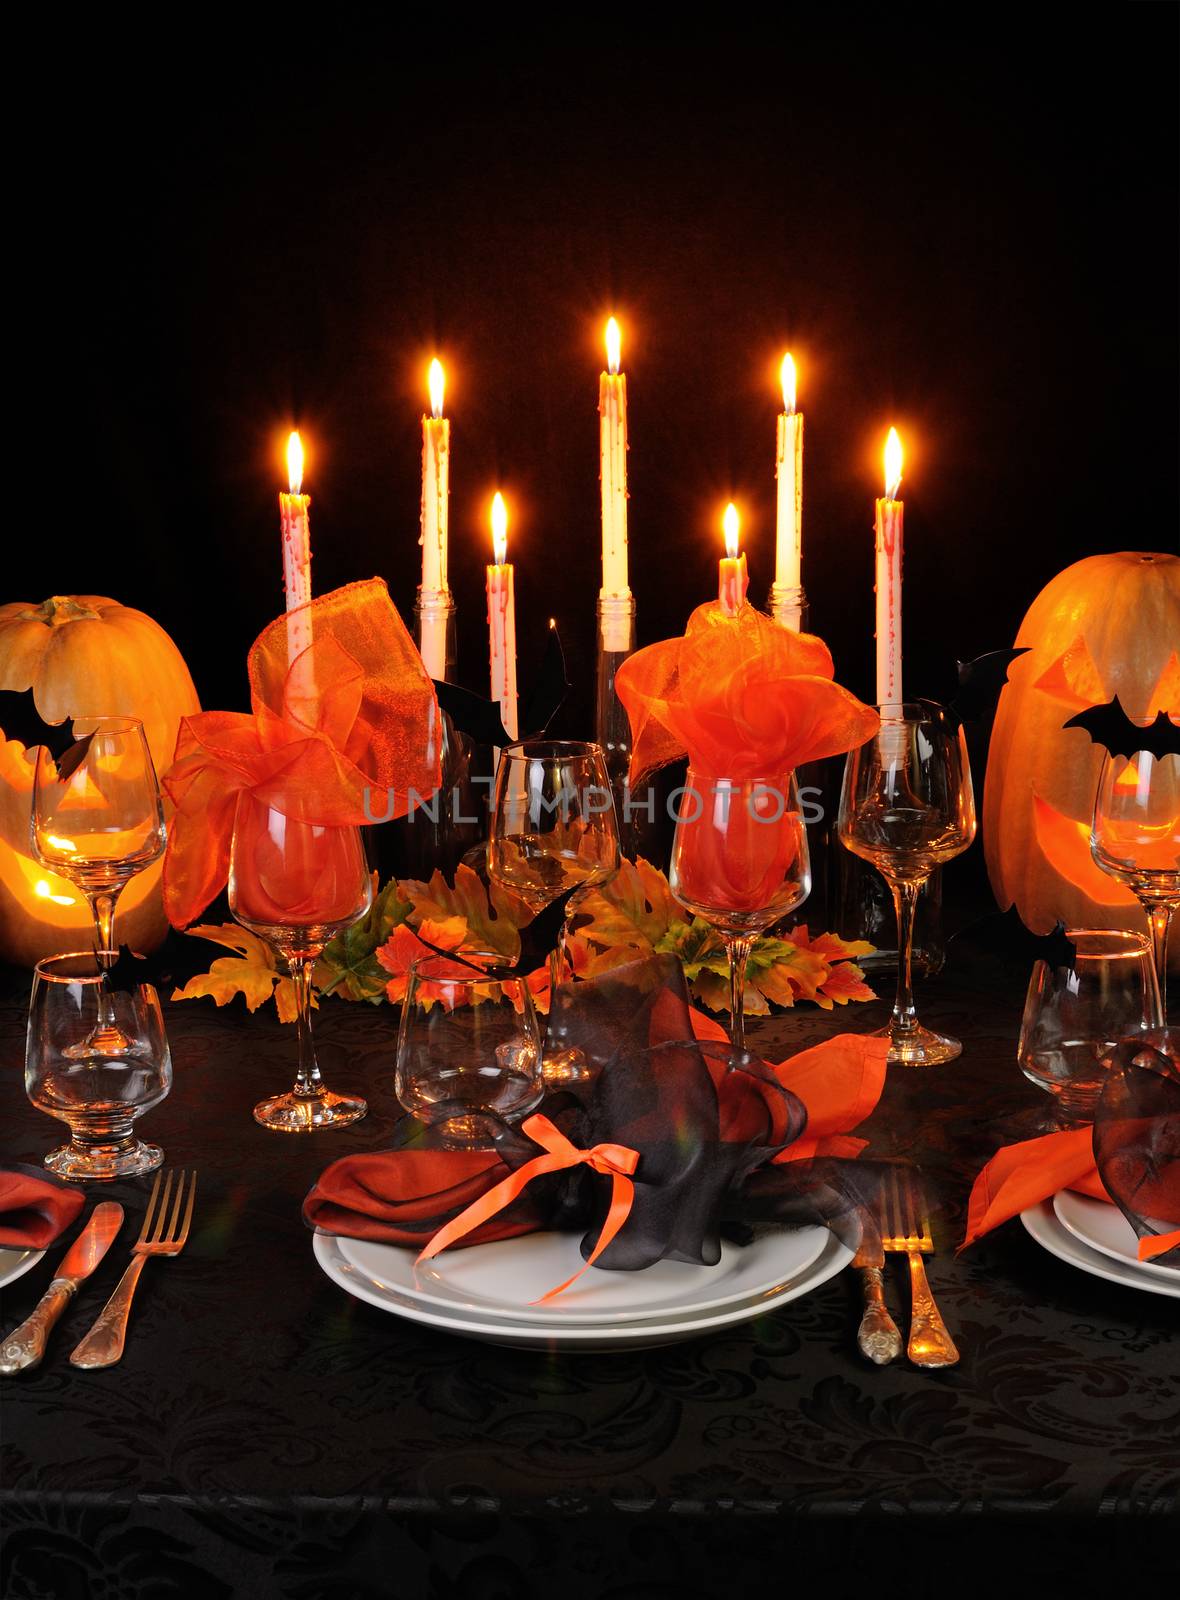 Festive table decoration for Halloween